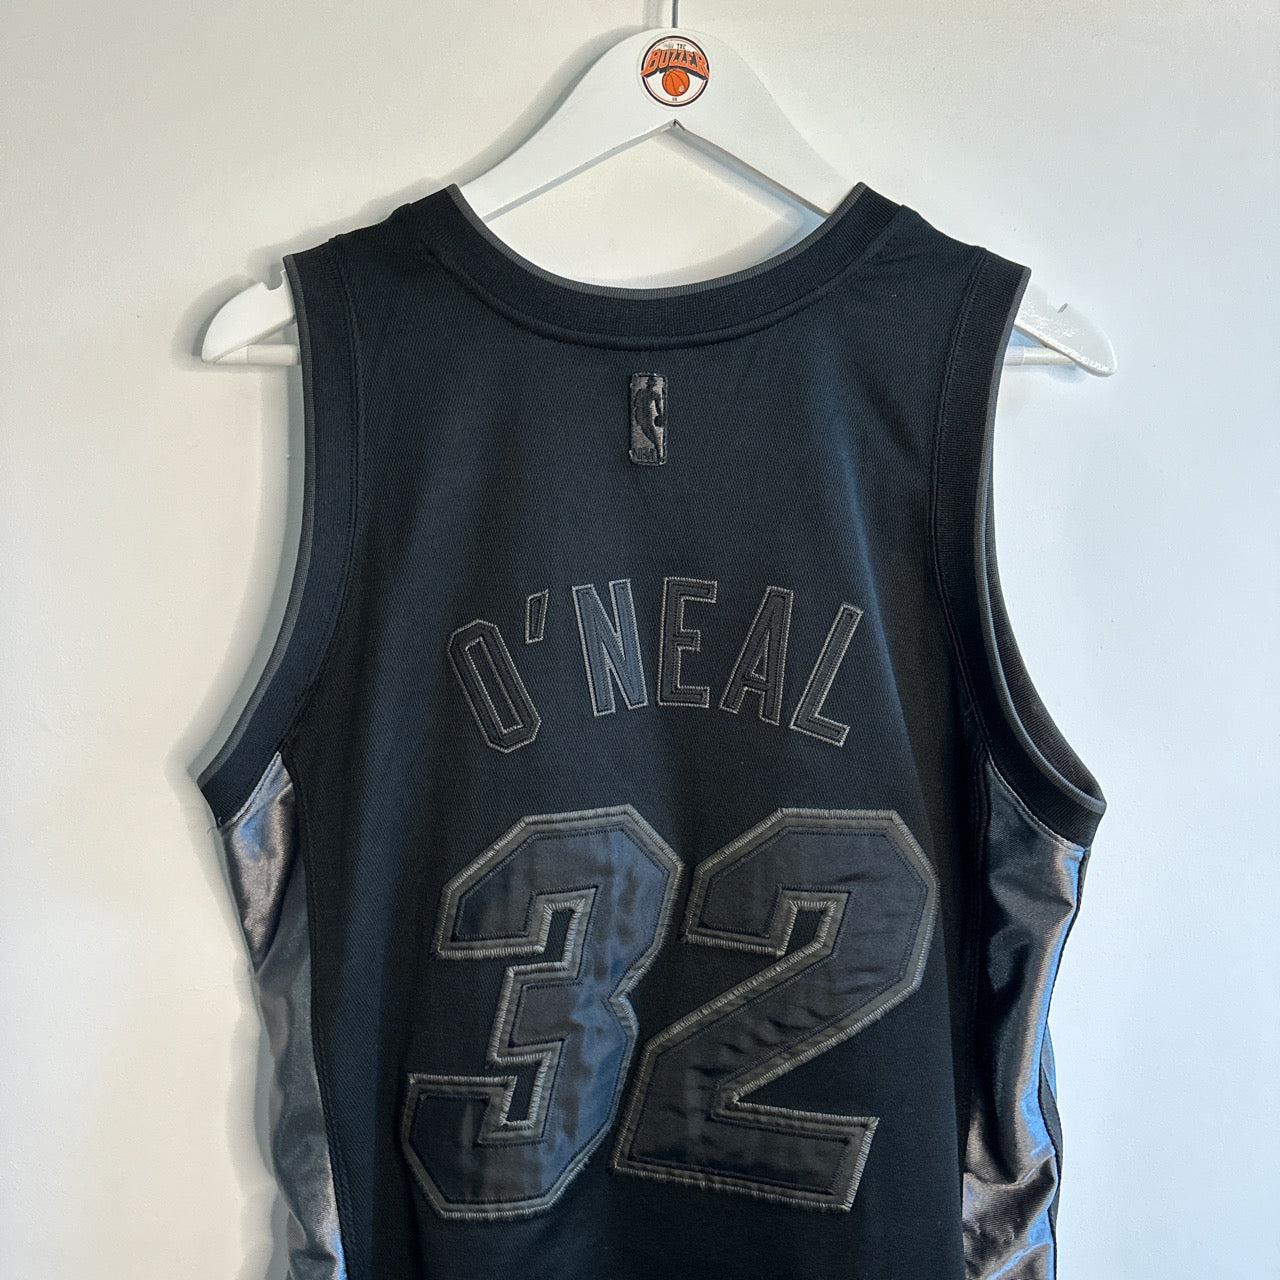 Miami Heat Shaquille O’Neal Champion jersey - Medium